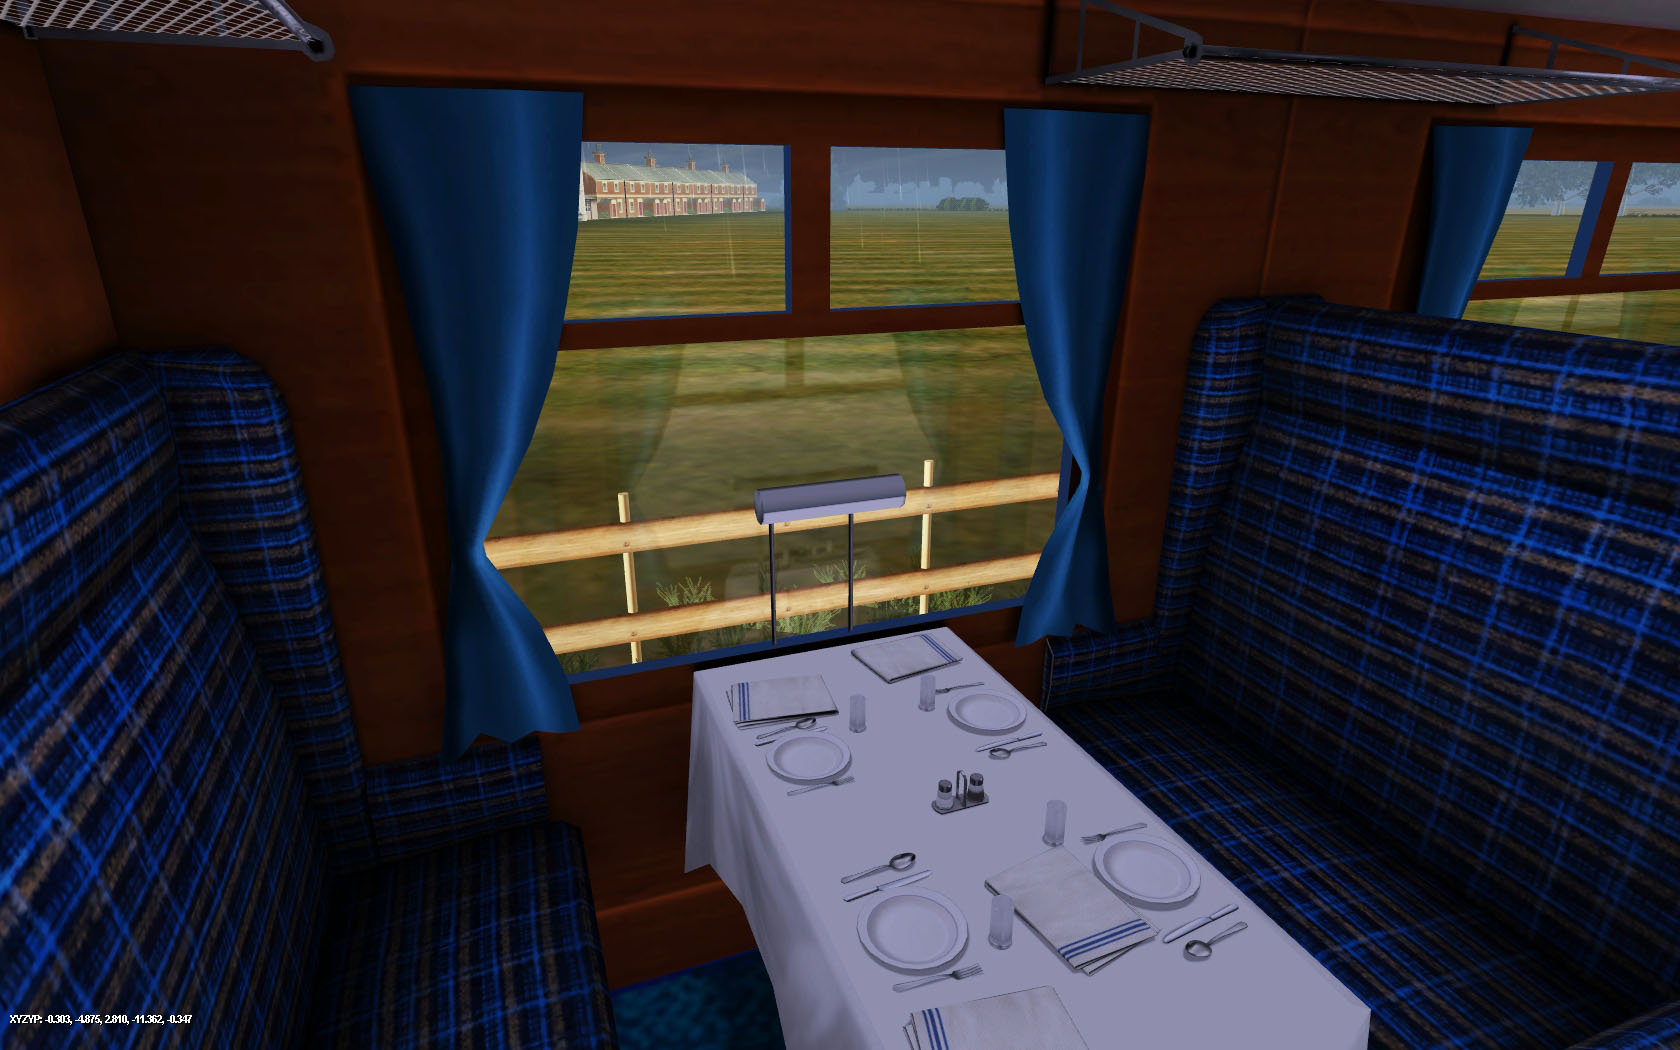 Trainz 2019 DLC: LMS Coronation Scot screenshot